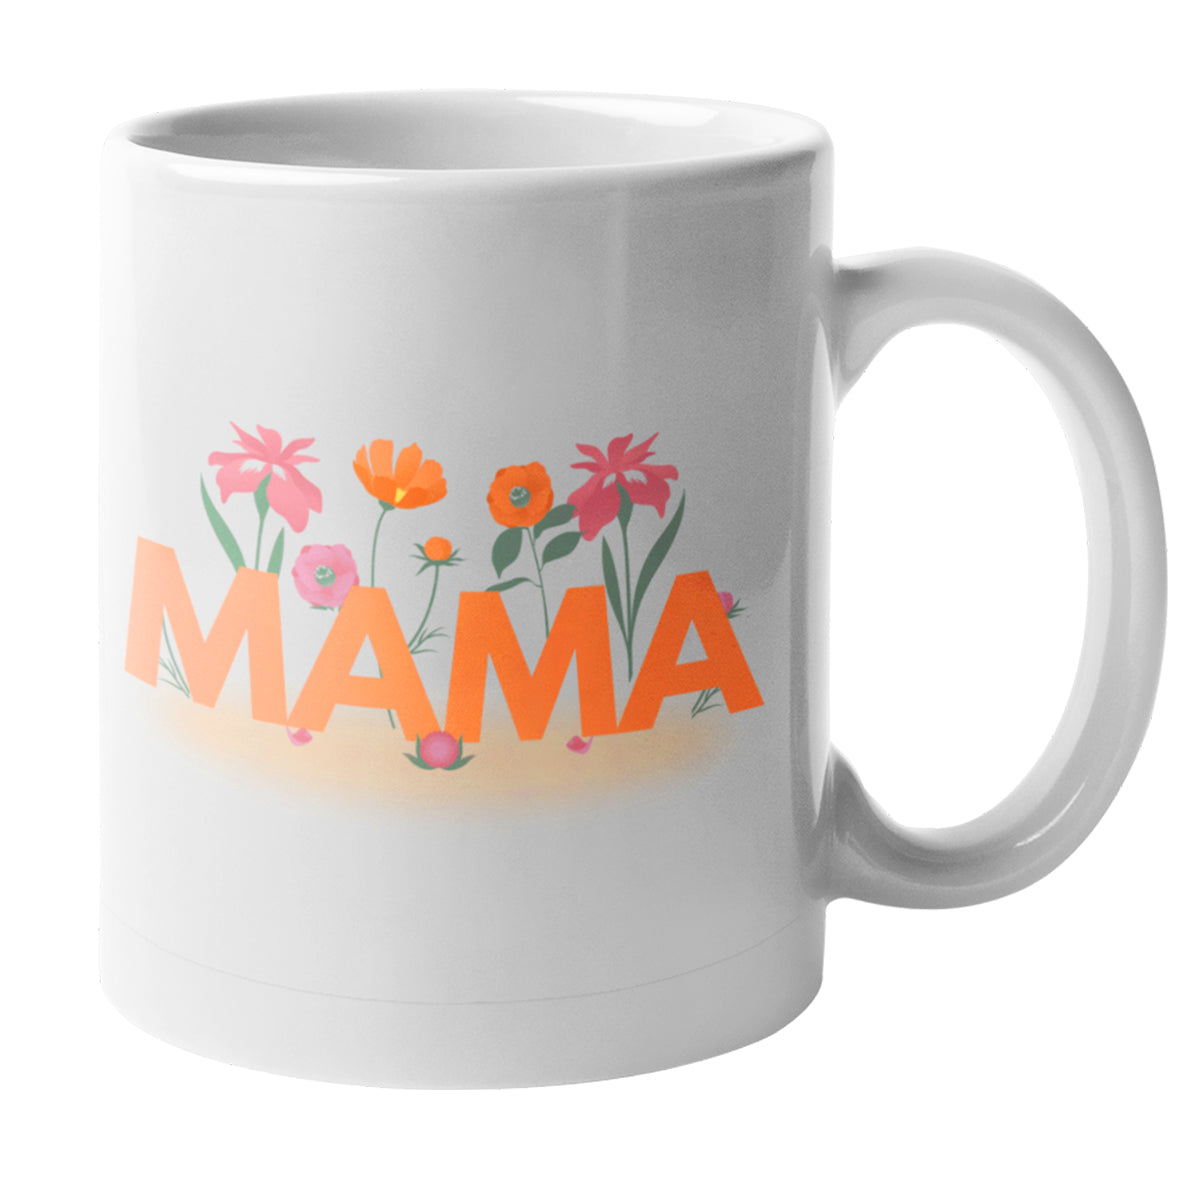 Cadou Pentru Mama: Cana Ceramica, 330 ml, Printata Cu Mesaj "Grafice Flori Si Textul Mama"